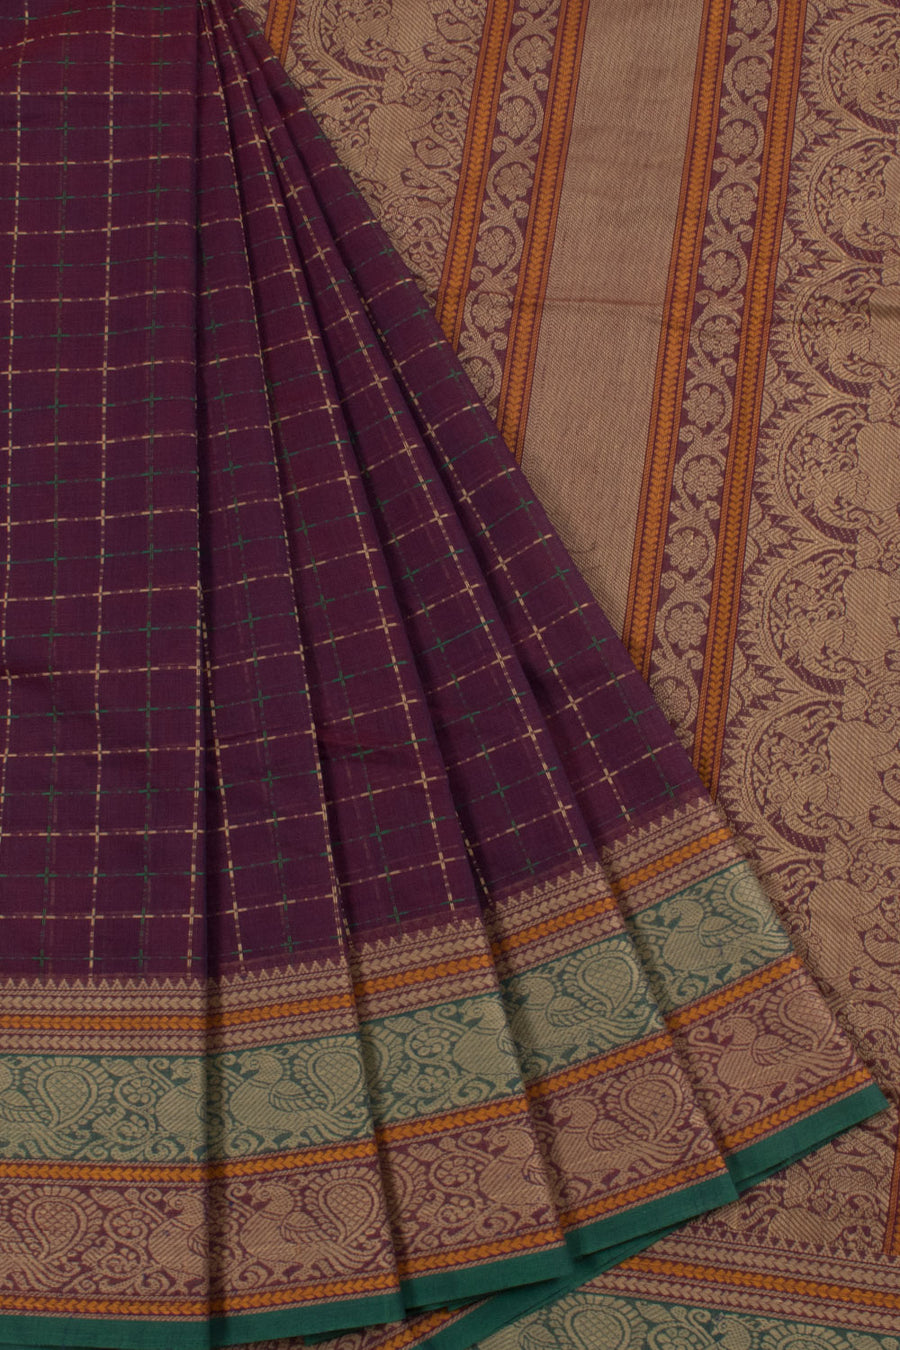 Handloom Kanchi Cotton Saree with Checks Design and Peacock Border